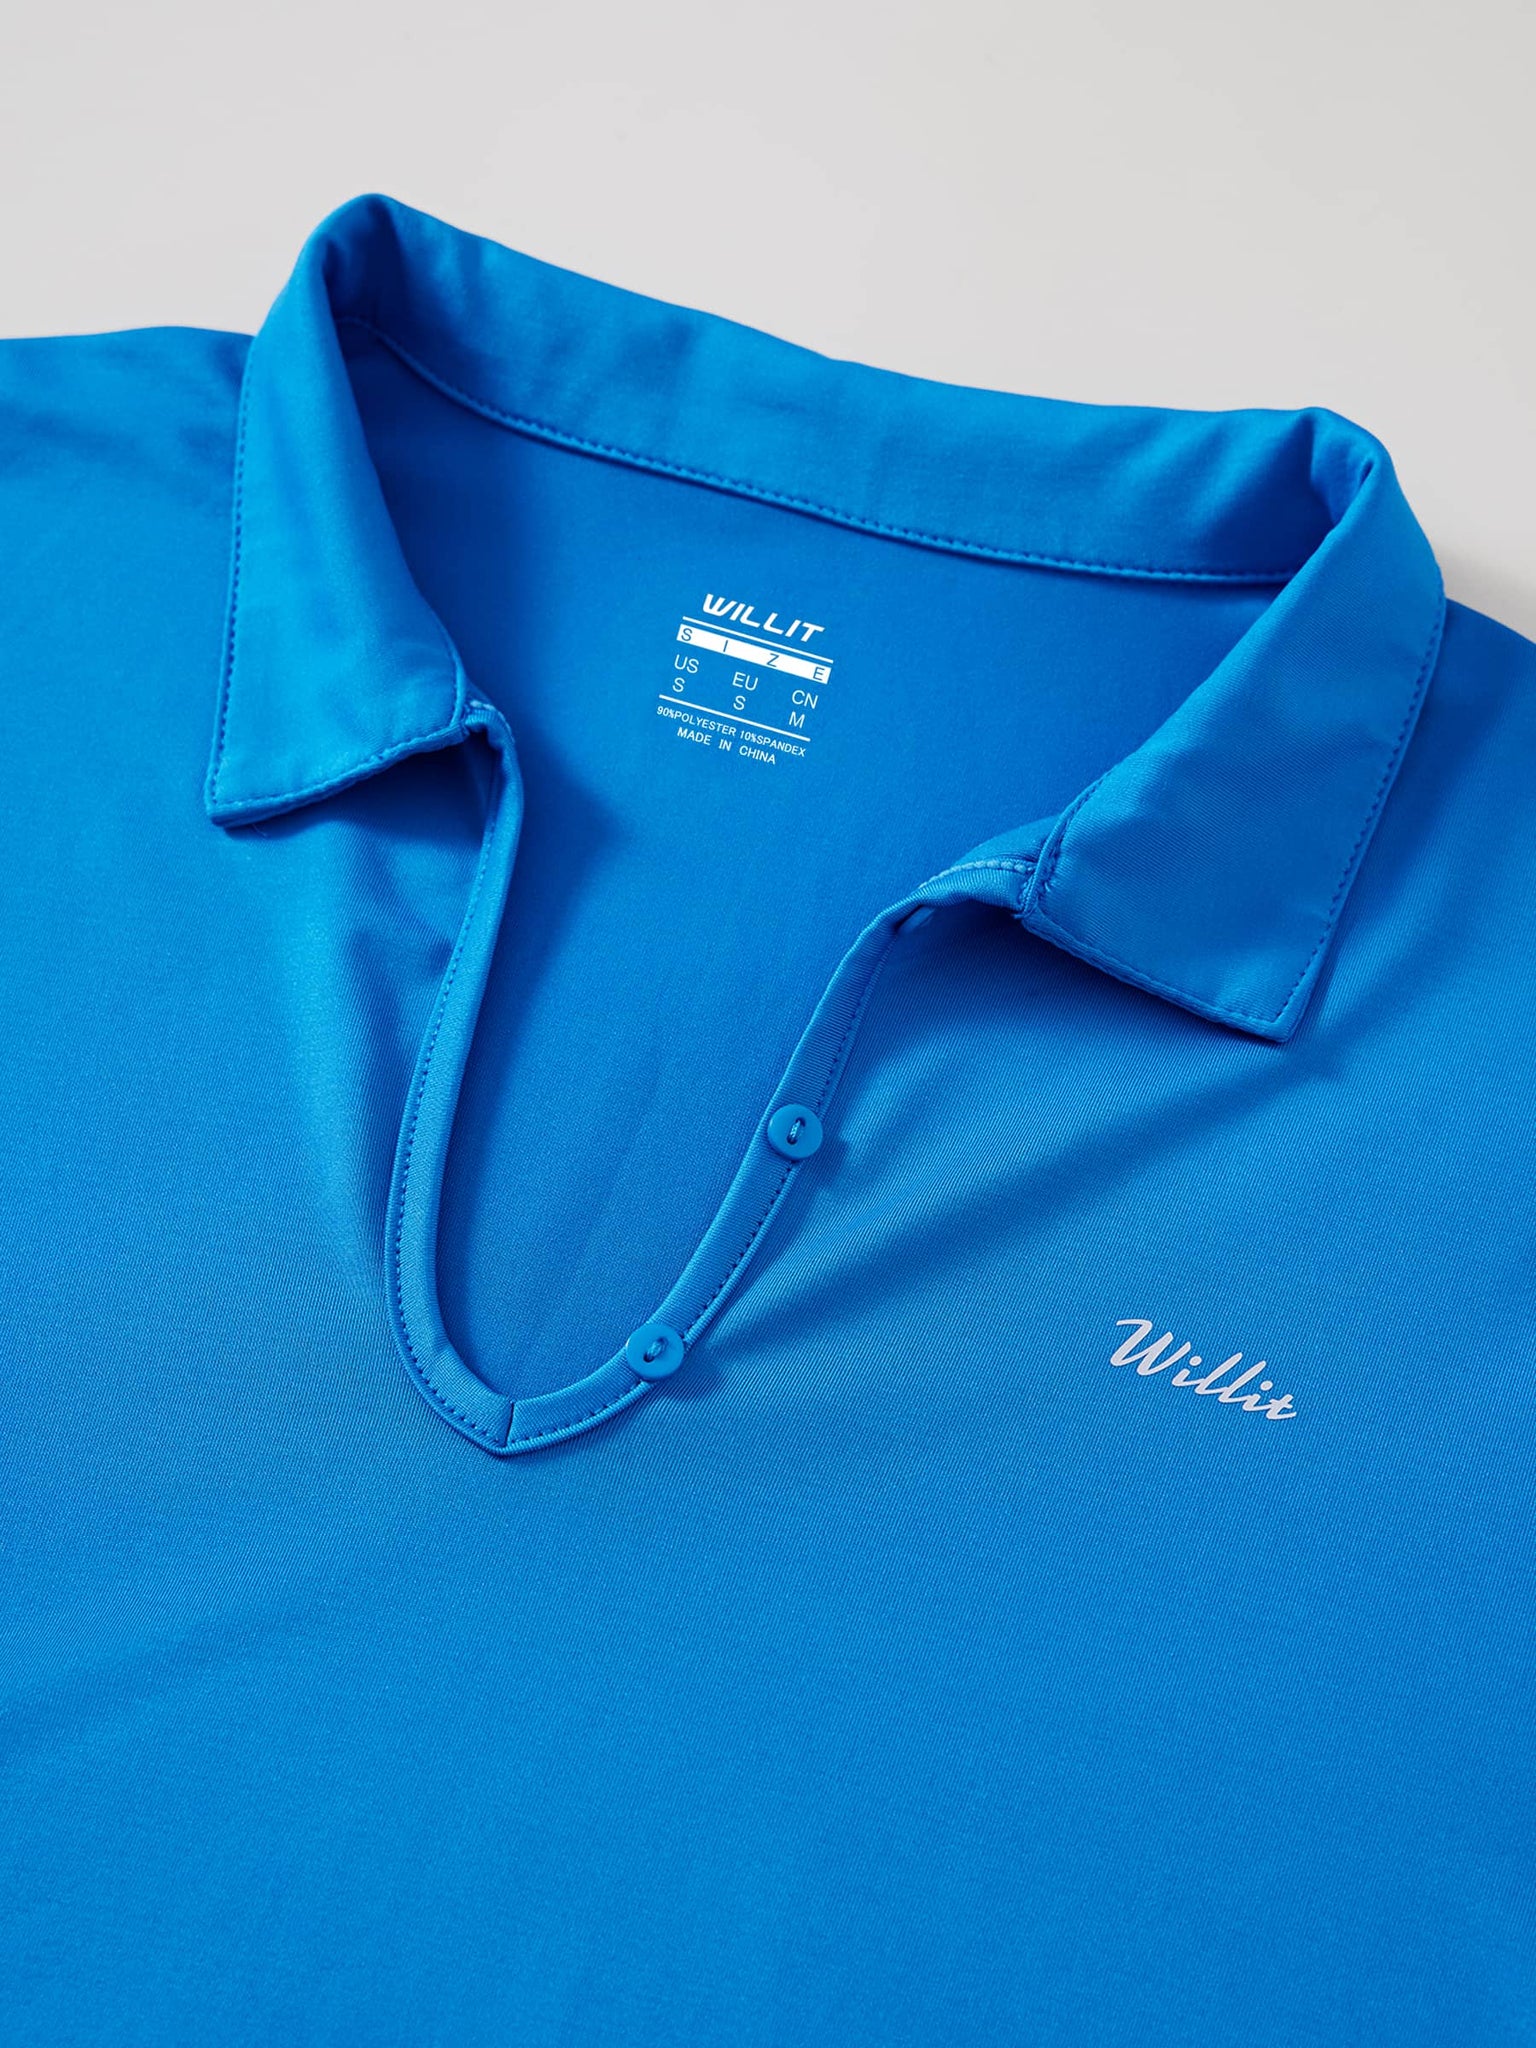 Willit Women's Golf Polo Short Sleeve Shirts_Blue4